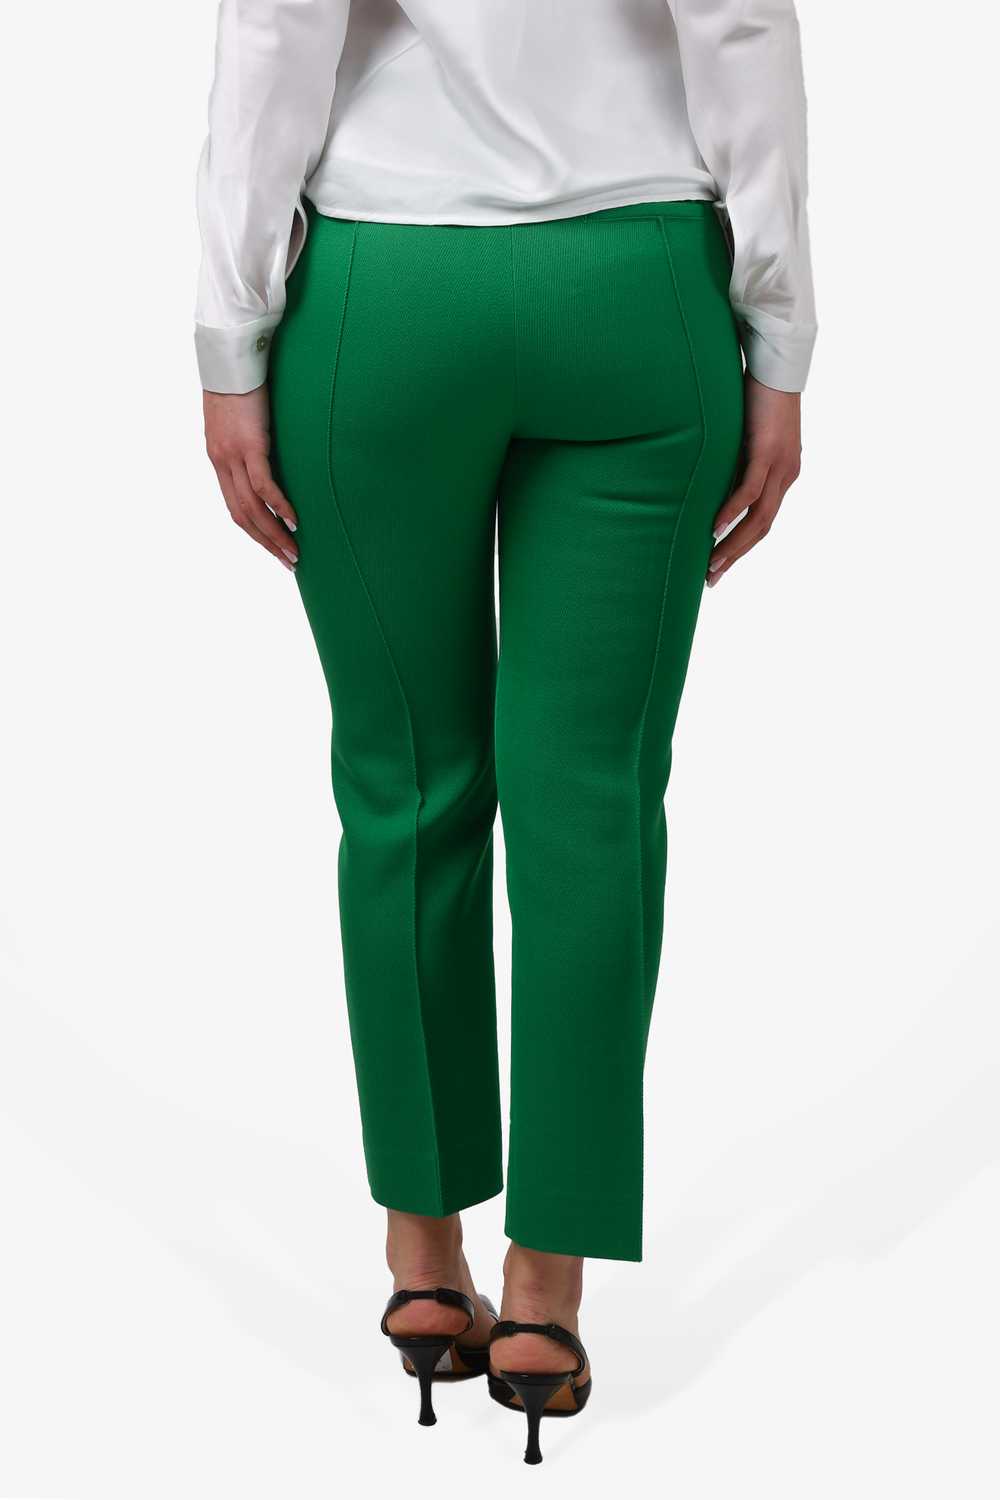 Celine Green Wool Straight Leg Trousers Size 34 - image 3